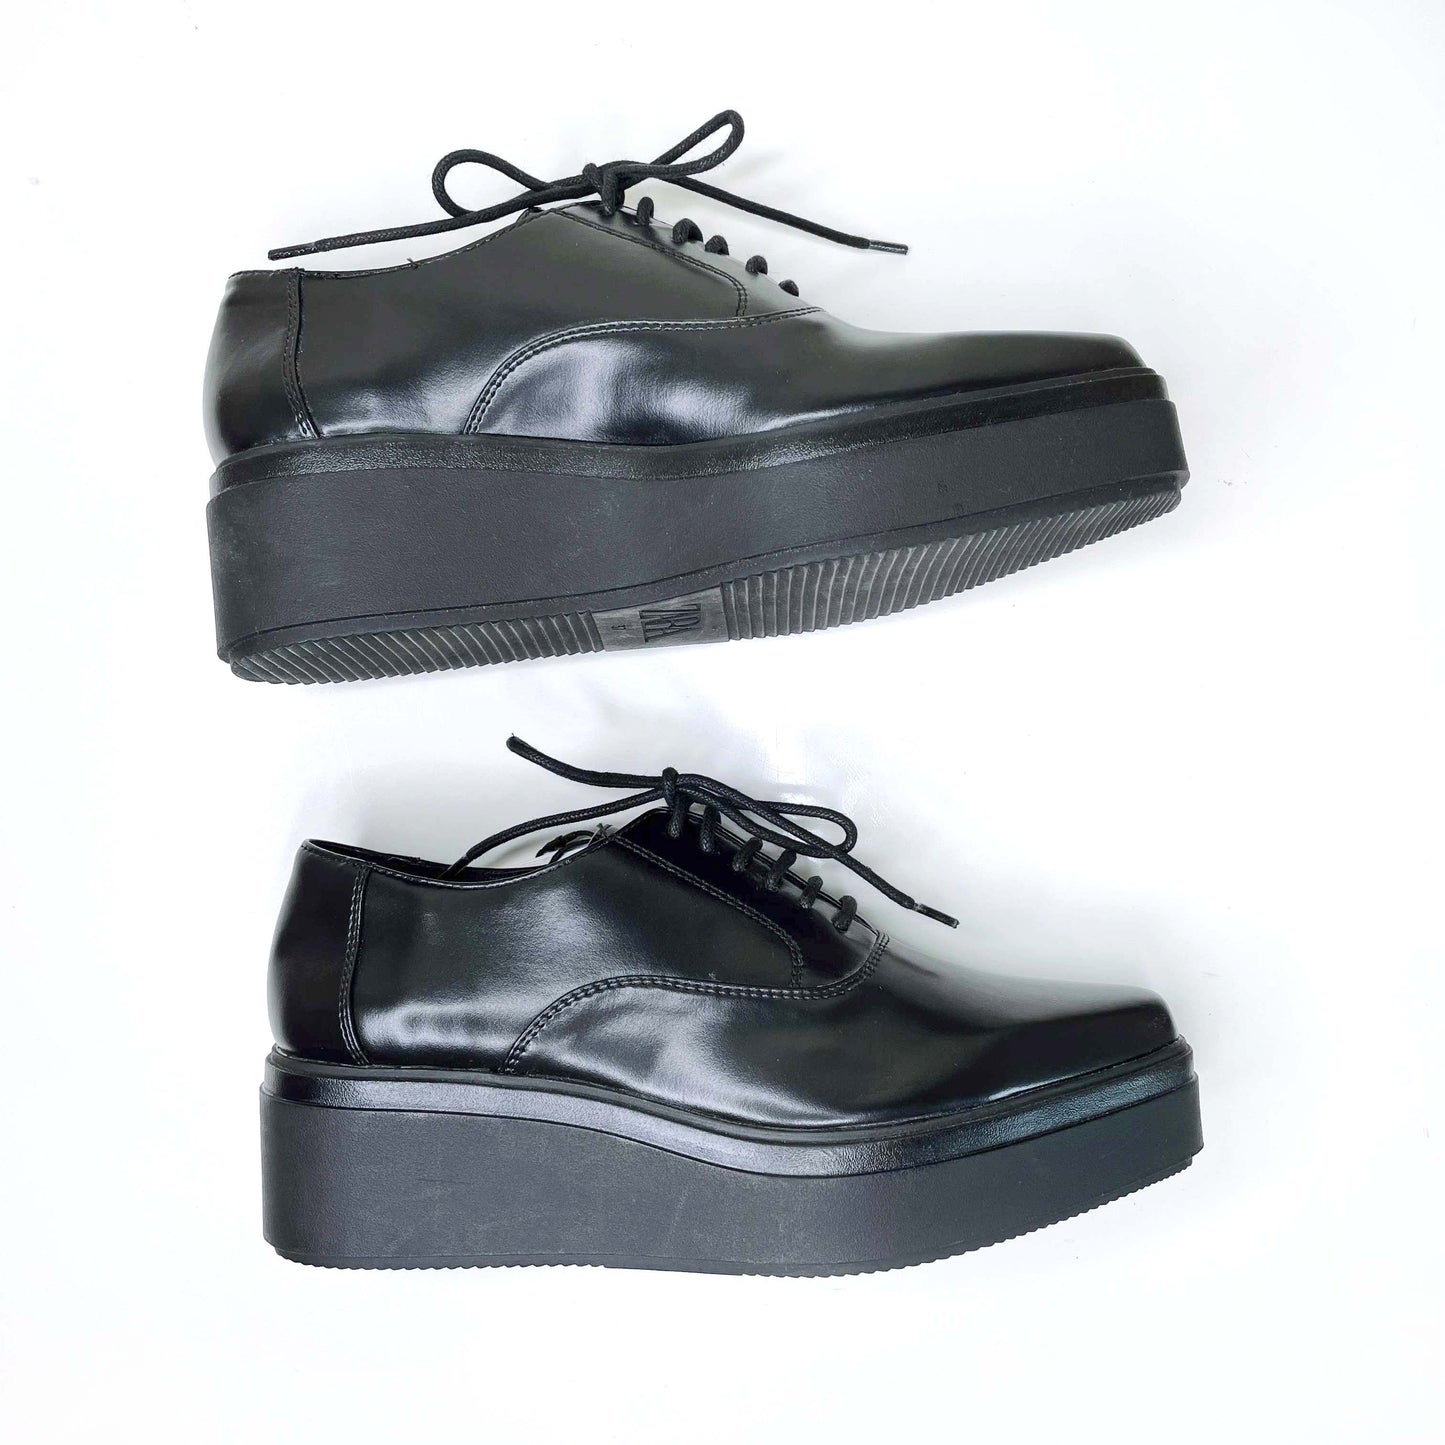 nwt zara black leather platform derby loafers - size 37